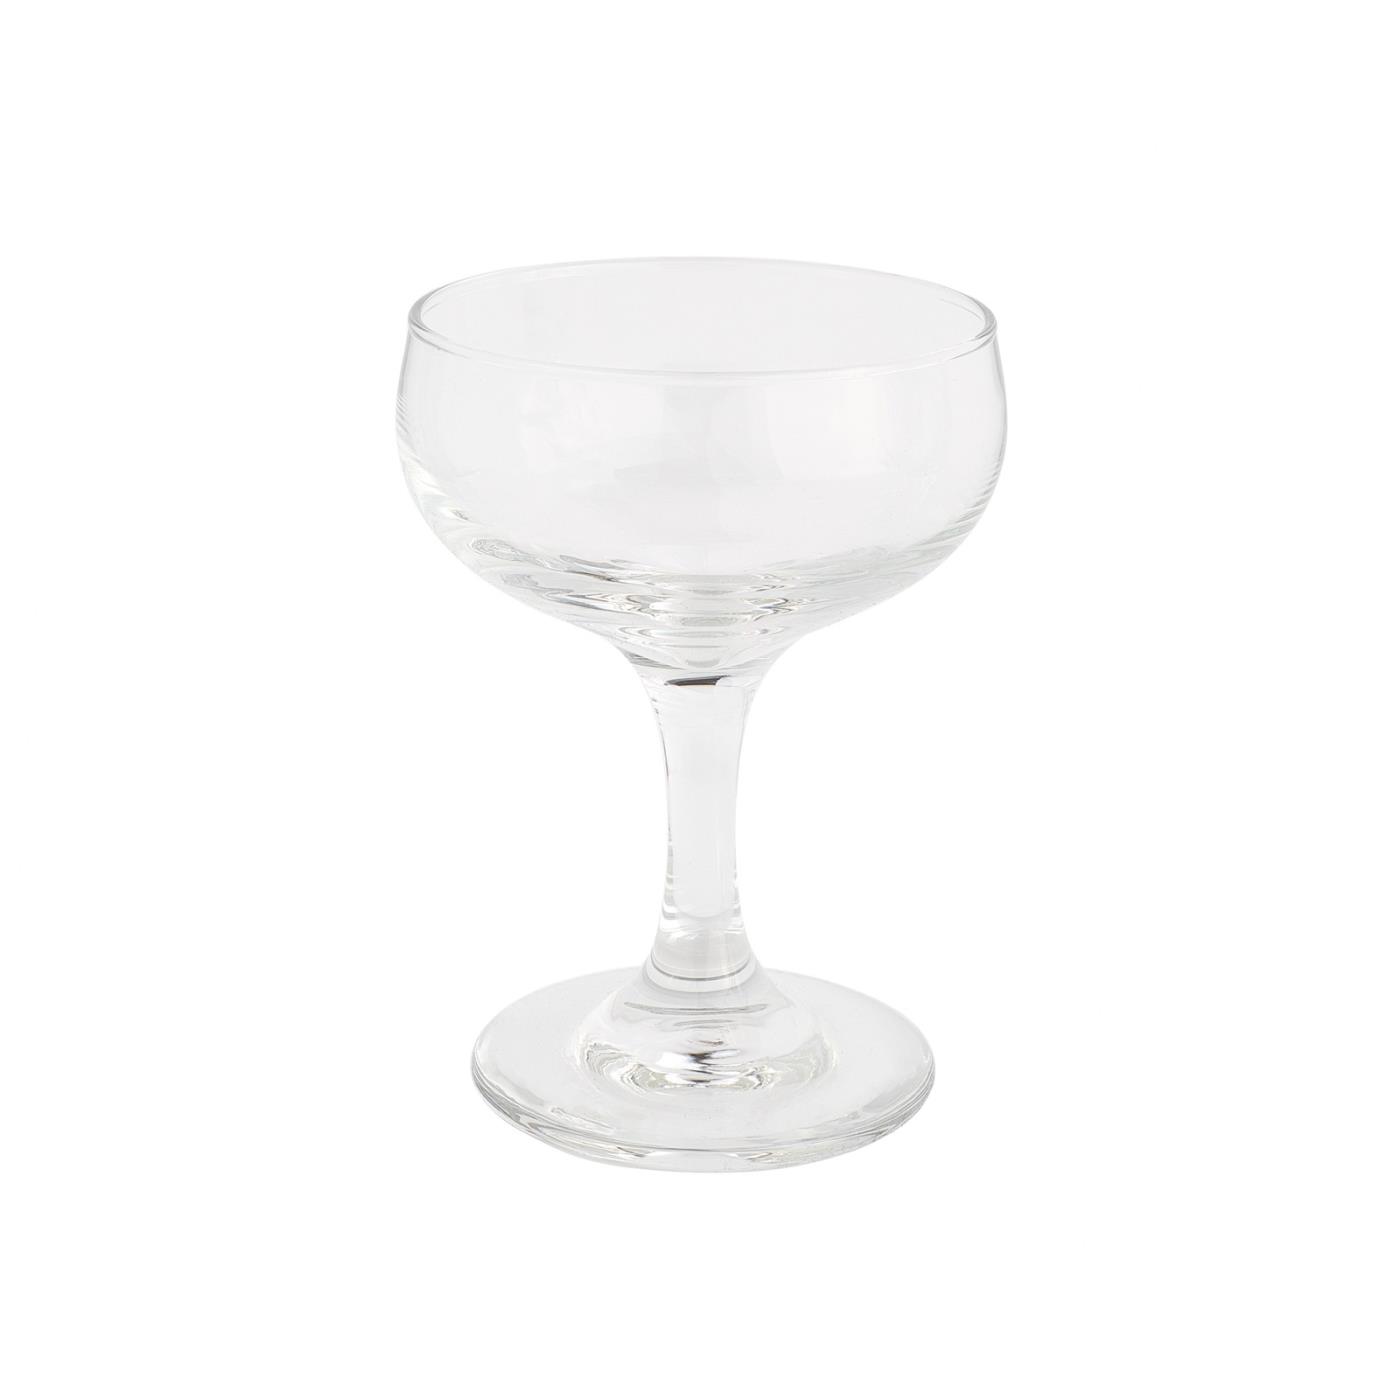 Standard All Purpose -  Standard Champagne Coupe Glass